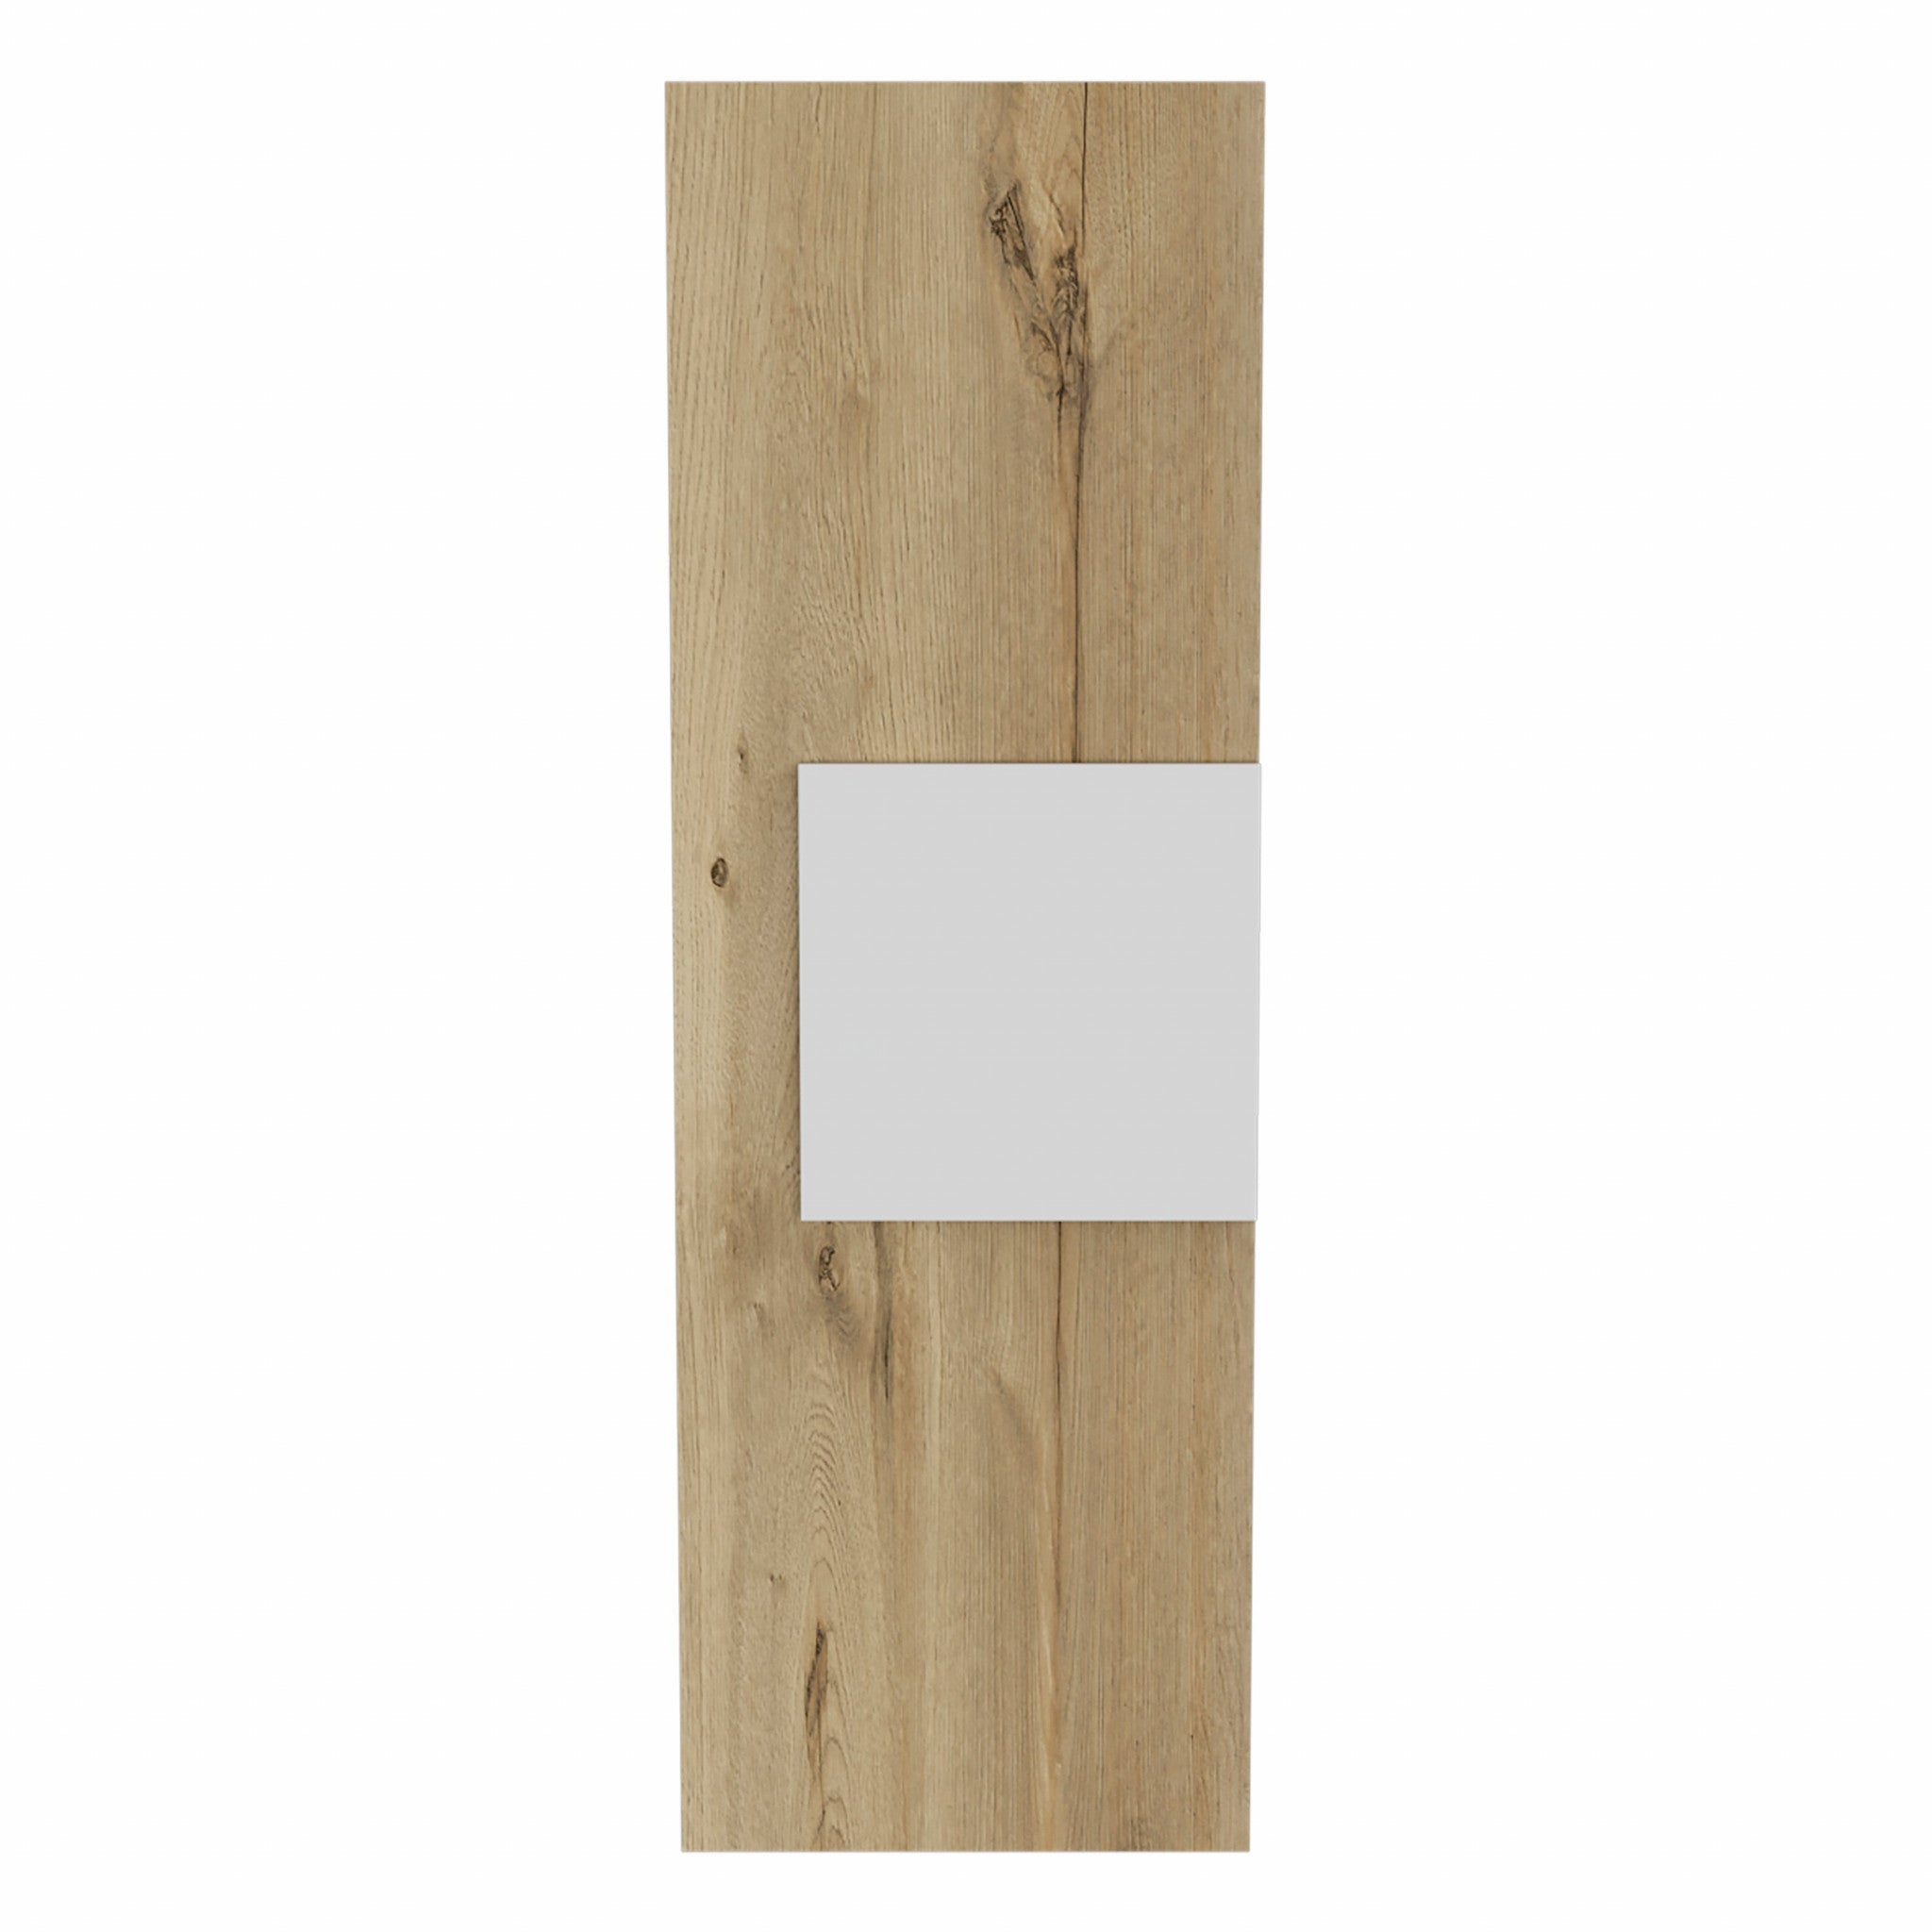 Light Oak and White Multi Purpose Vertical Hanging Cabinet